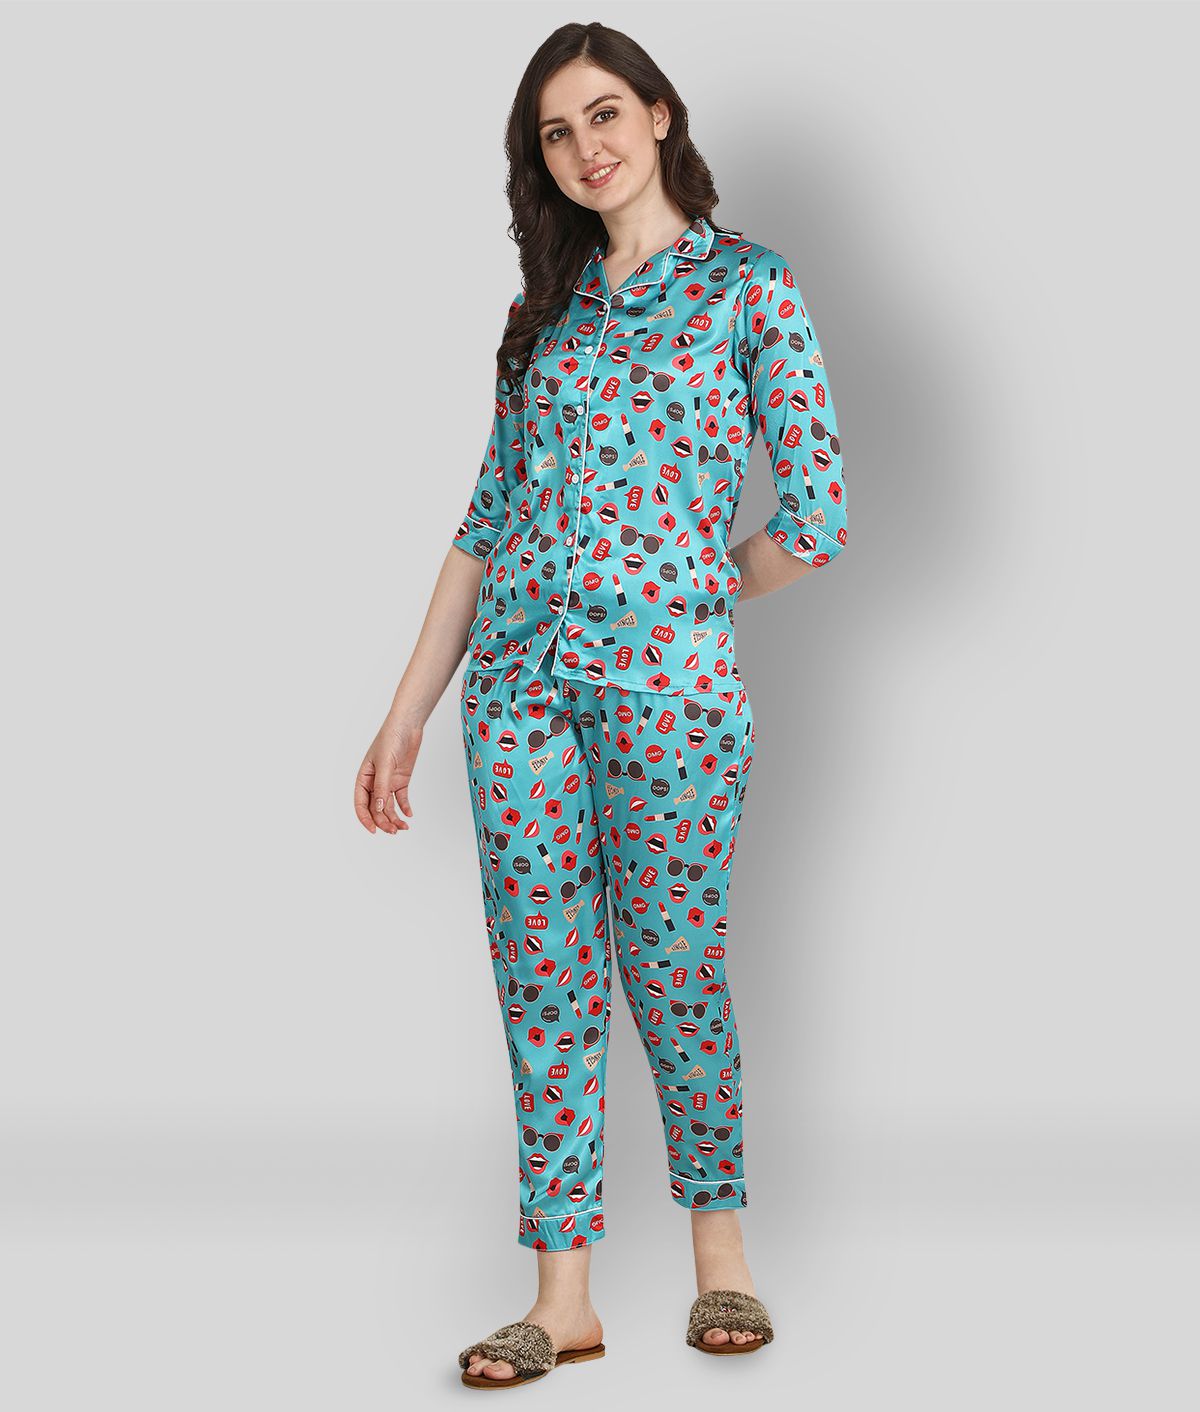     			Berrylicious - Blue Satin Women's Nightwear Nightsuit Sets ( Pack of 1 )